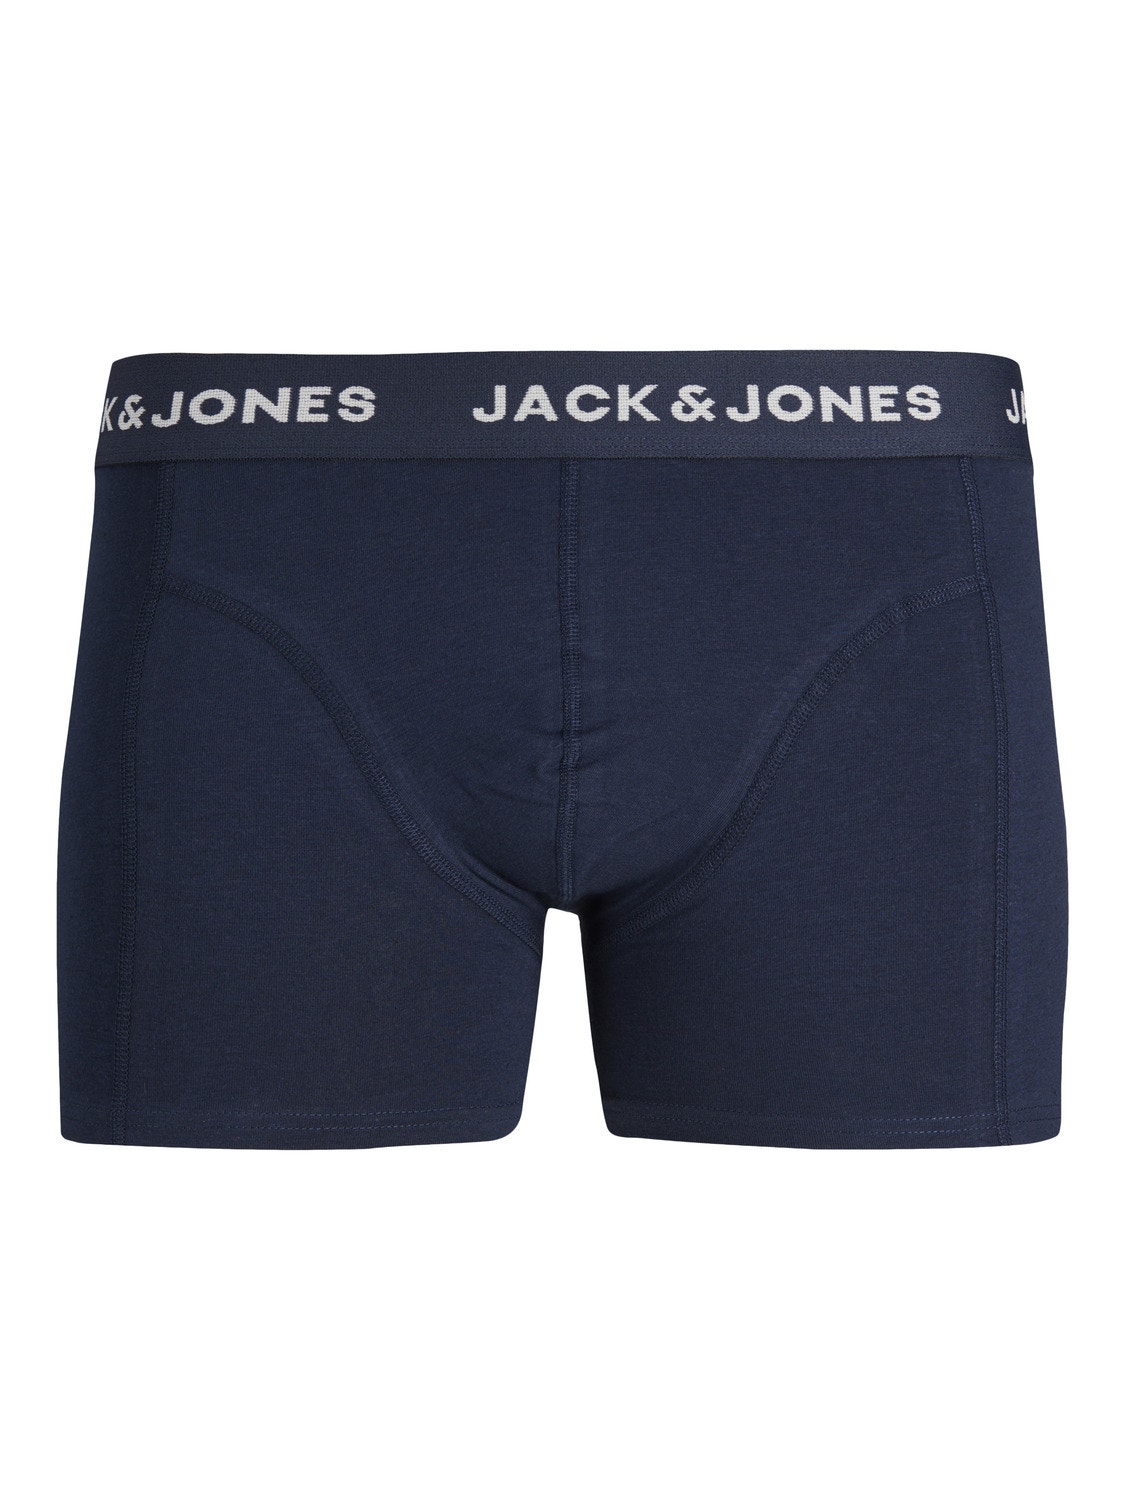 Jack & Jones Plus 3 Trunks -Navy Blazer - 12257400